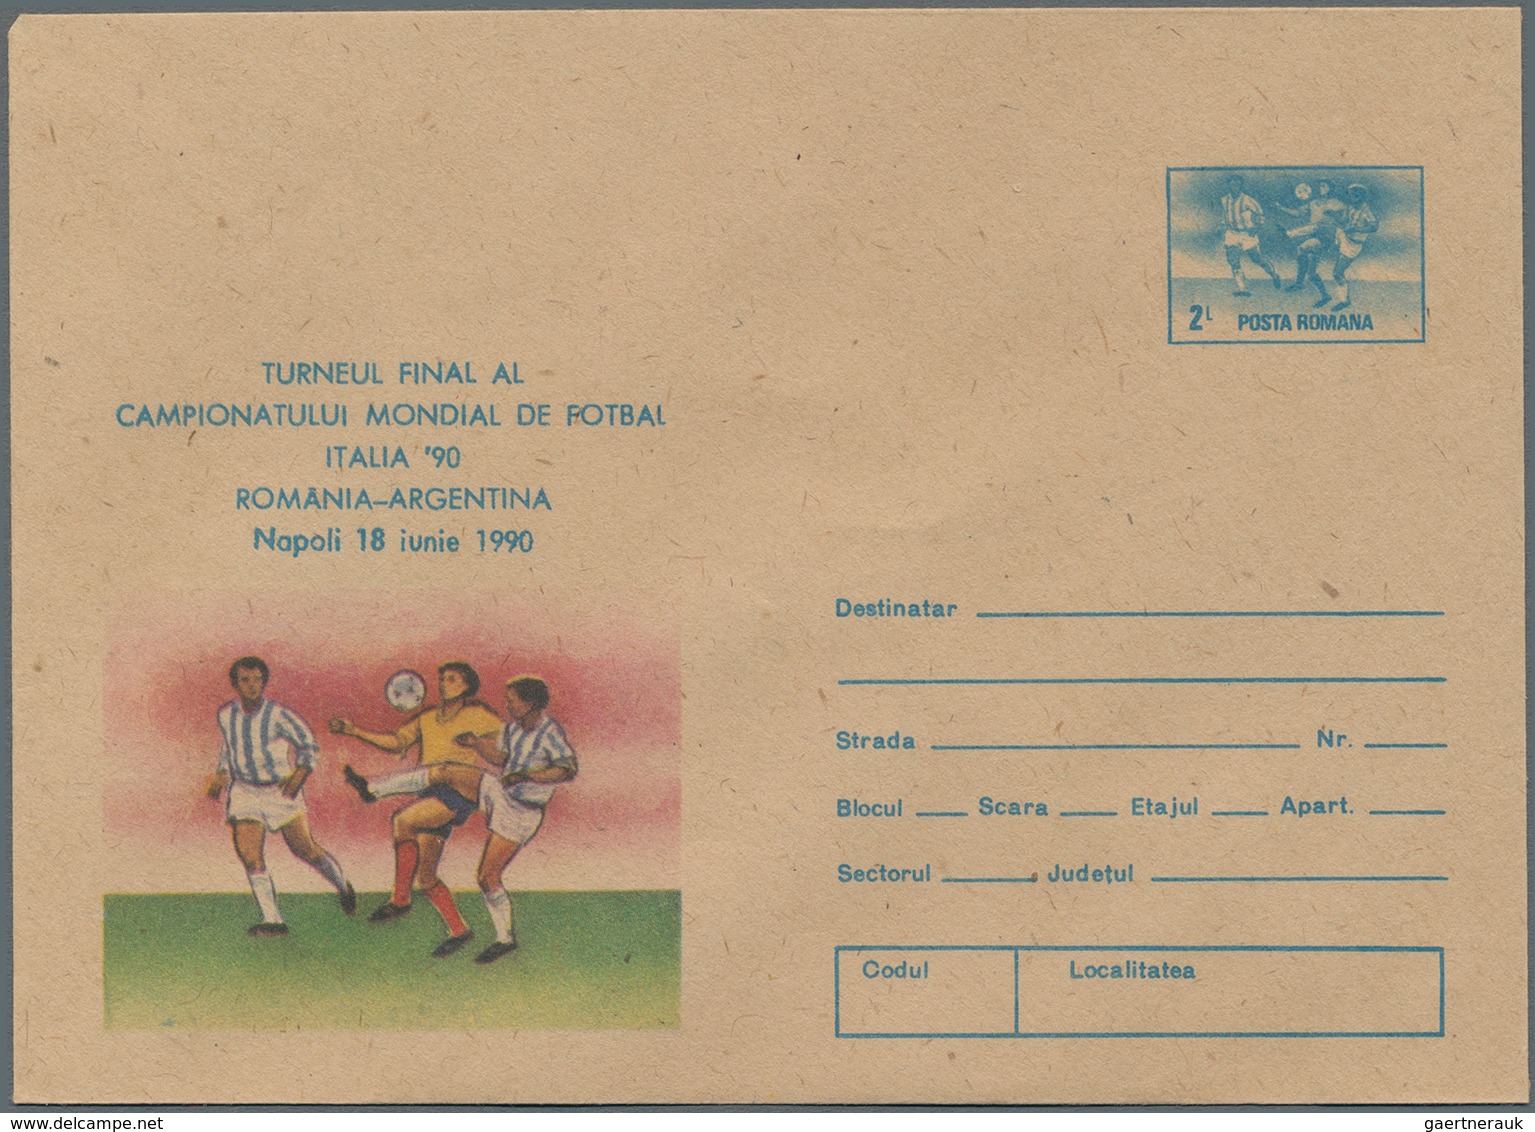 Rumänien - Ganzsachen: 1981/93 Ca. 1.690 Almost Exclusively Unused Pictured Envelopes Incl. A Few Al - Ganzsachen